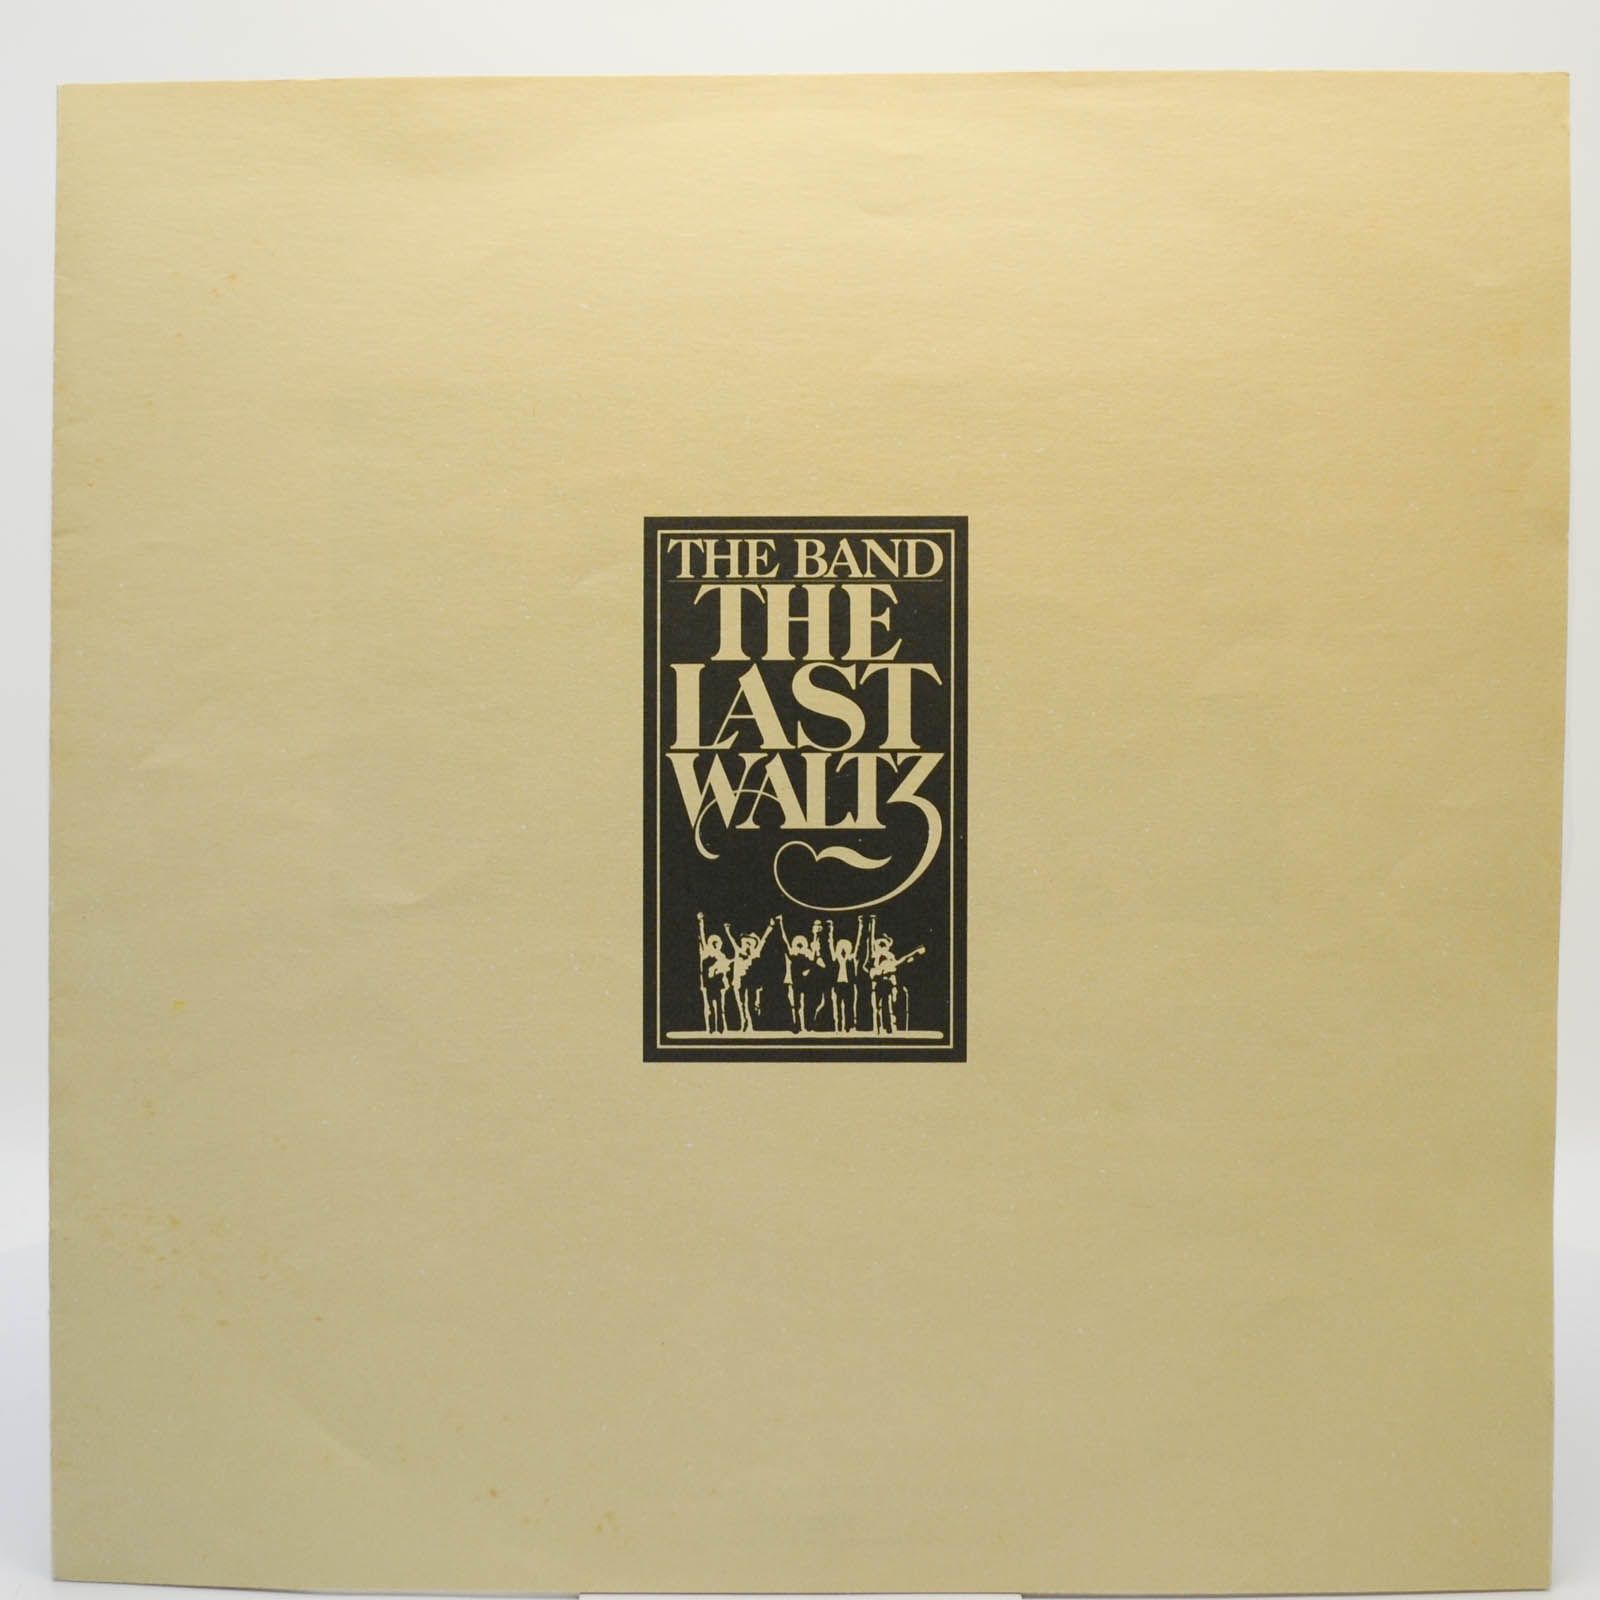 Band — The Last Waltz (3LP), 1978